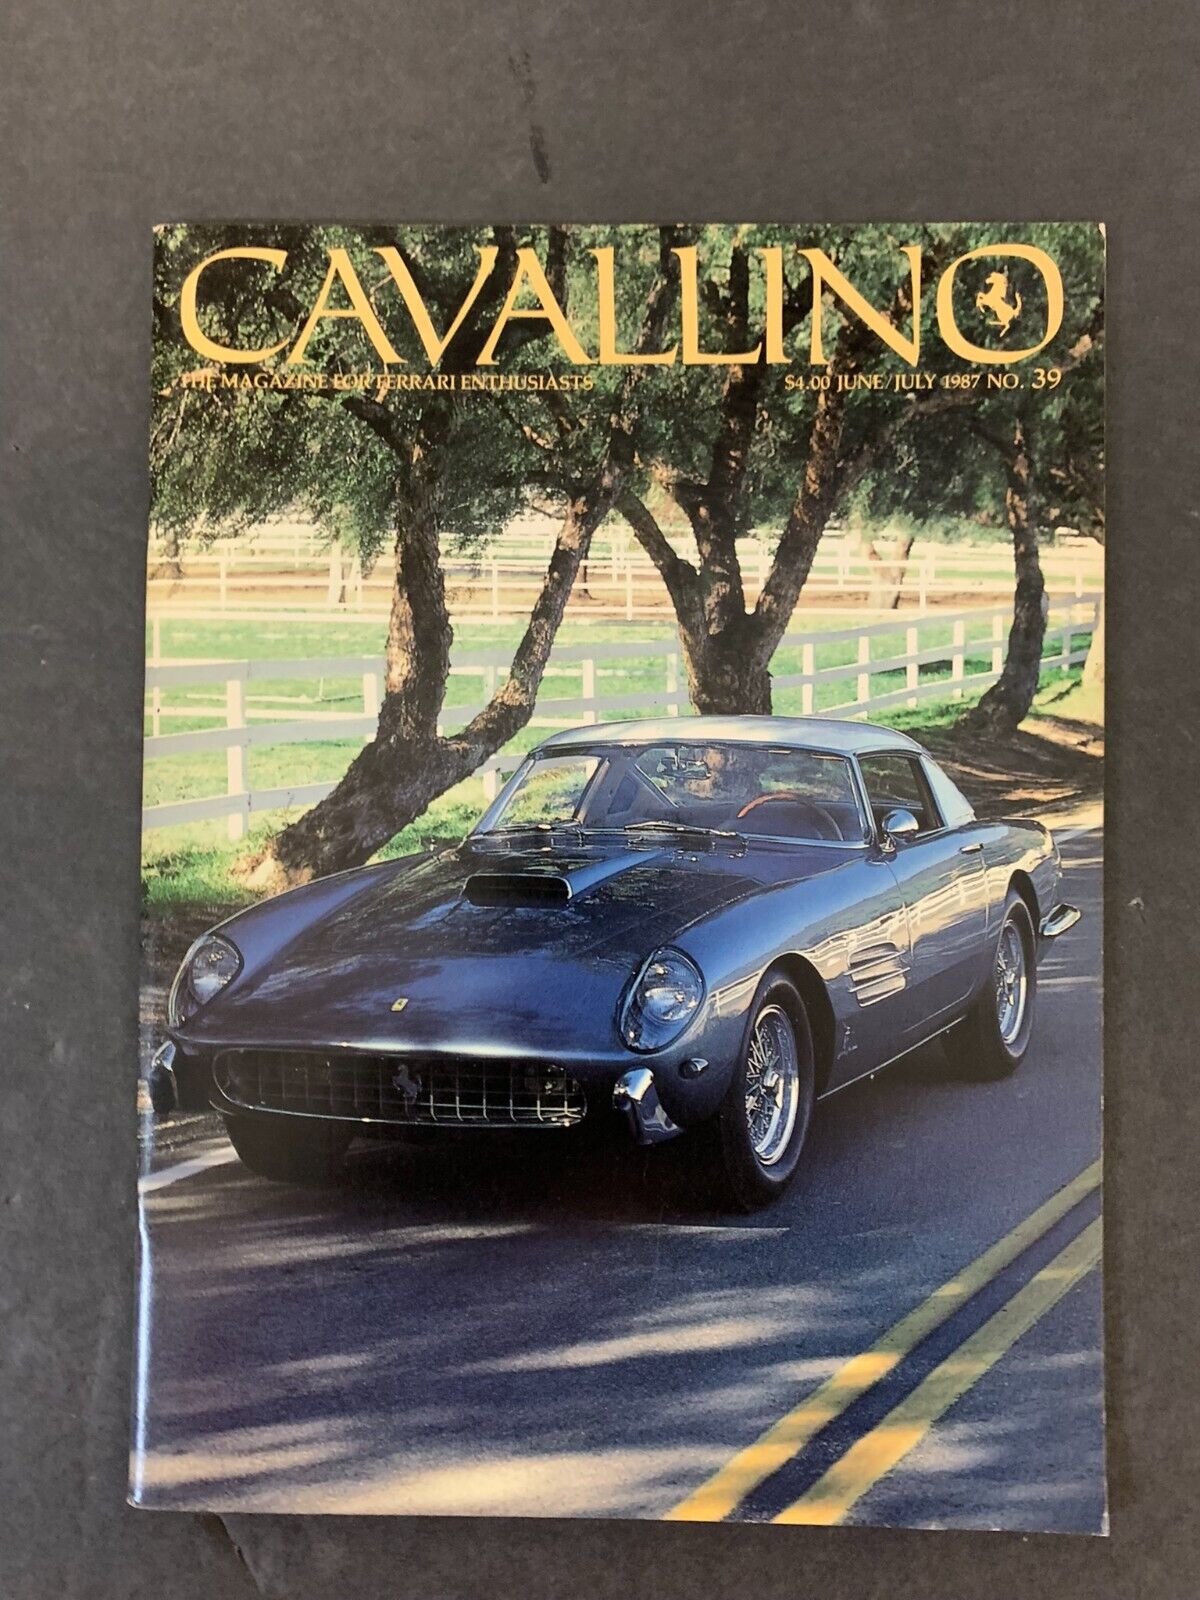 Cavallino Magazine For Ferrari Enthusiasts June July 1987 Issue #39